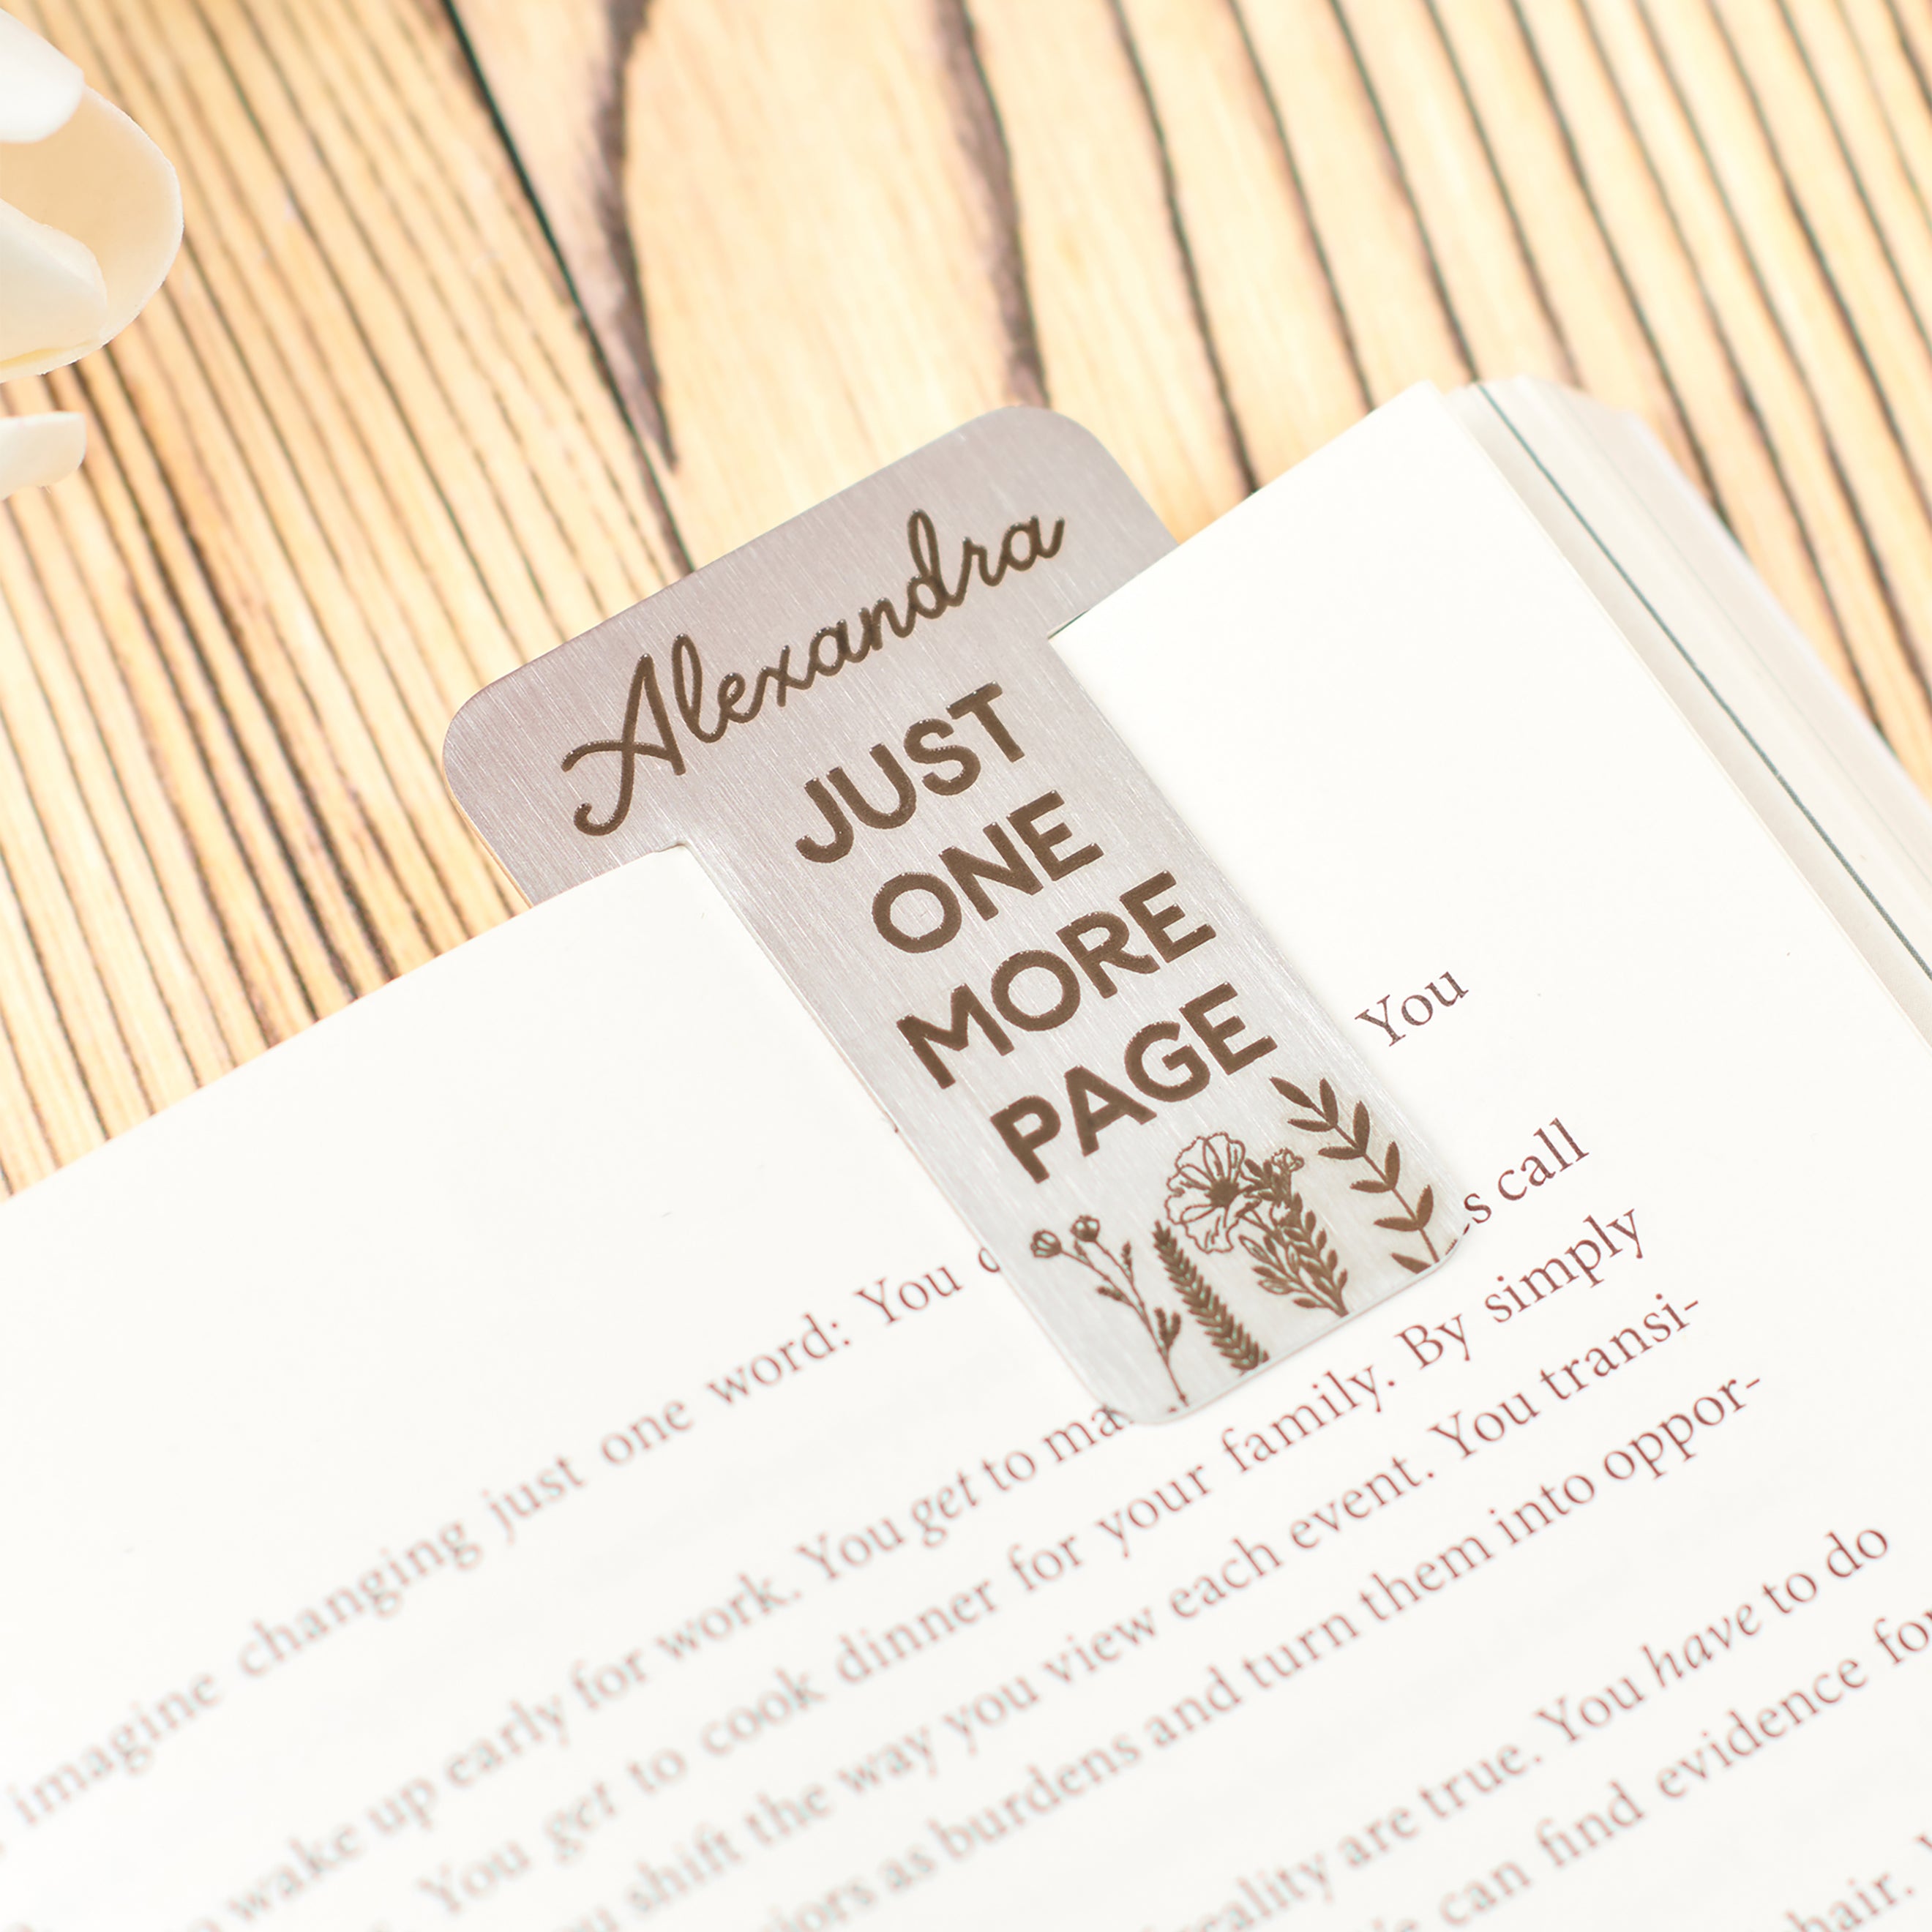 Oakdene Designs Keepsakes & Tokens Personalised 'One More Page' Mini Metal Bookmark